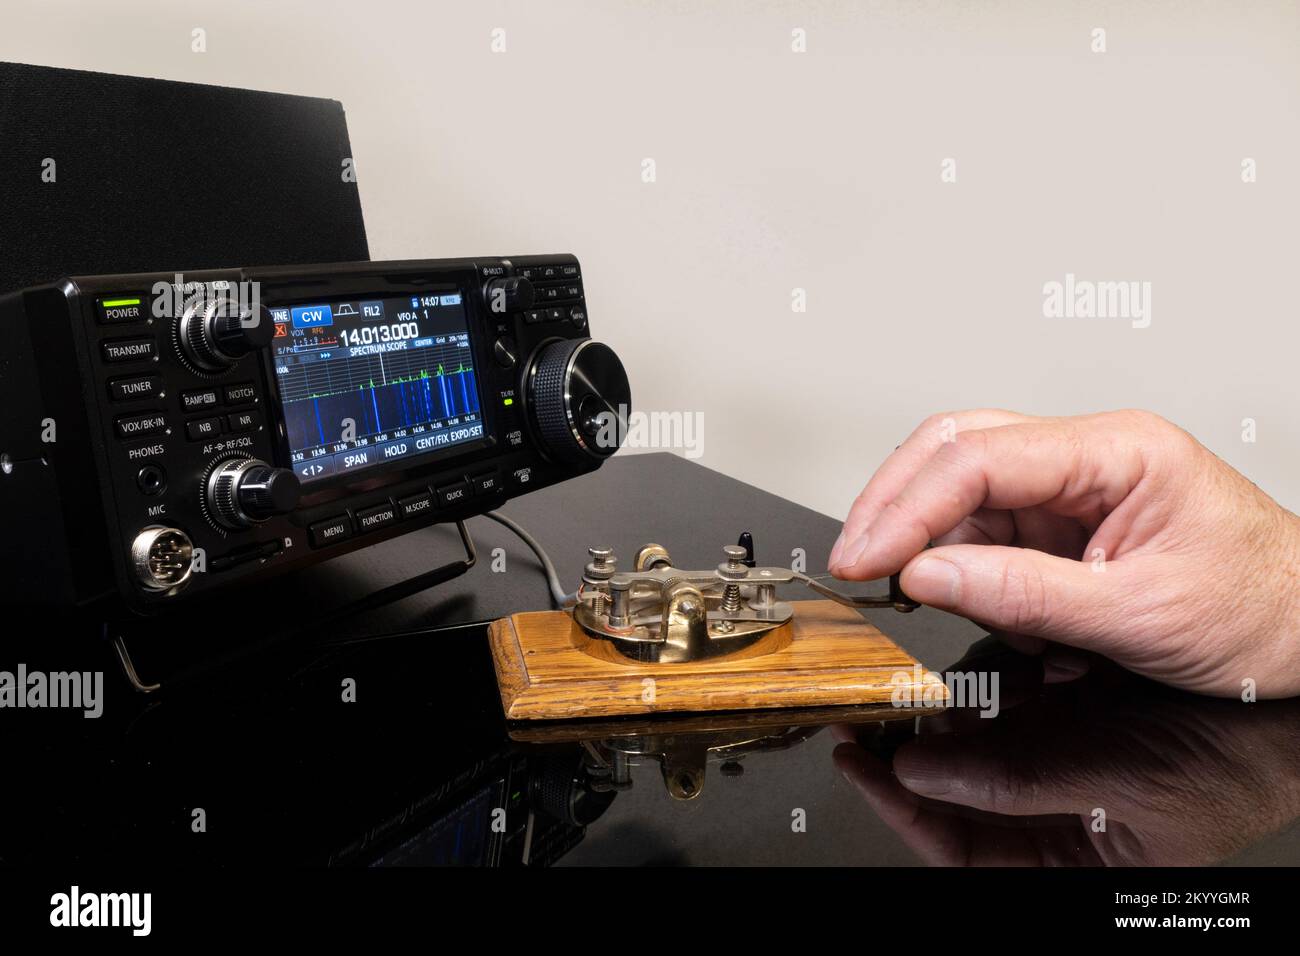 Man operating morse code key with modern radio transceiver Stock Photo